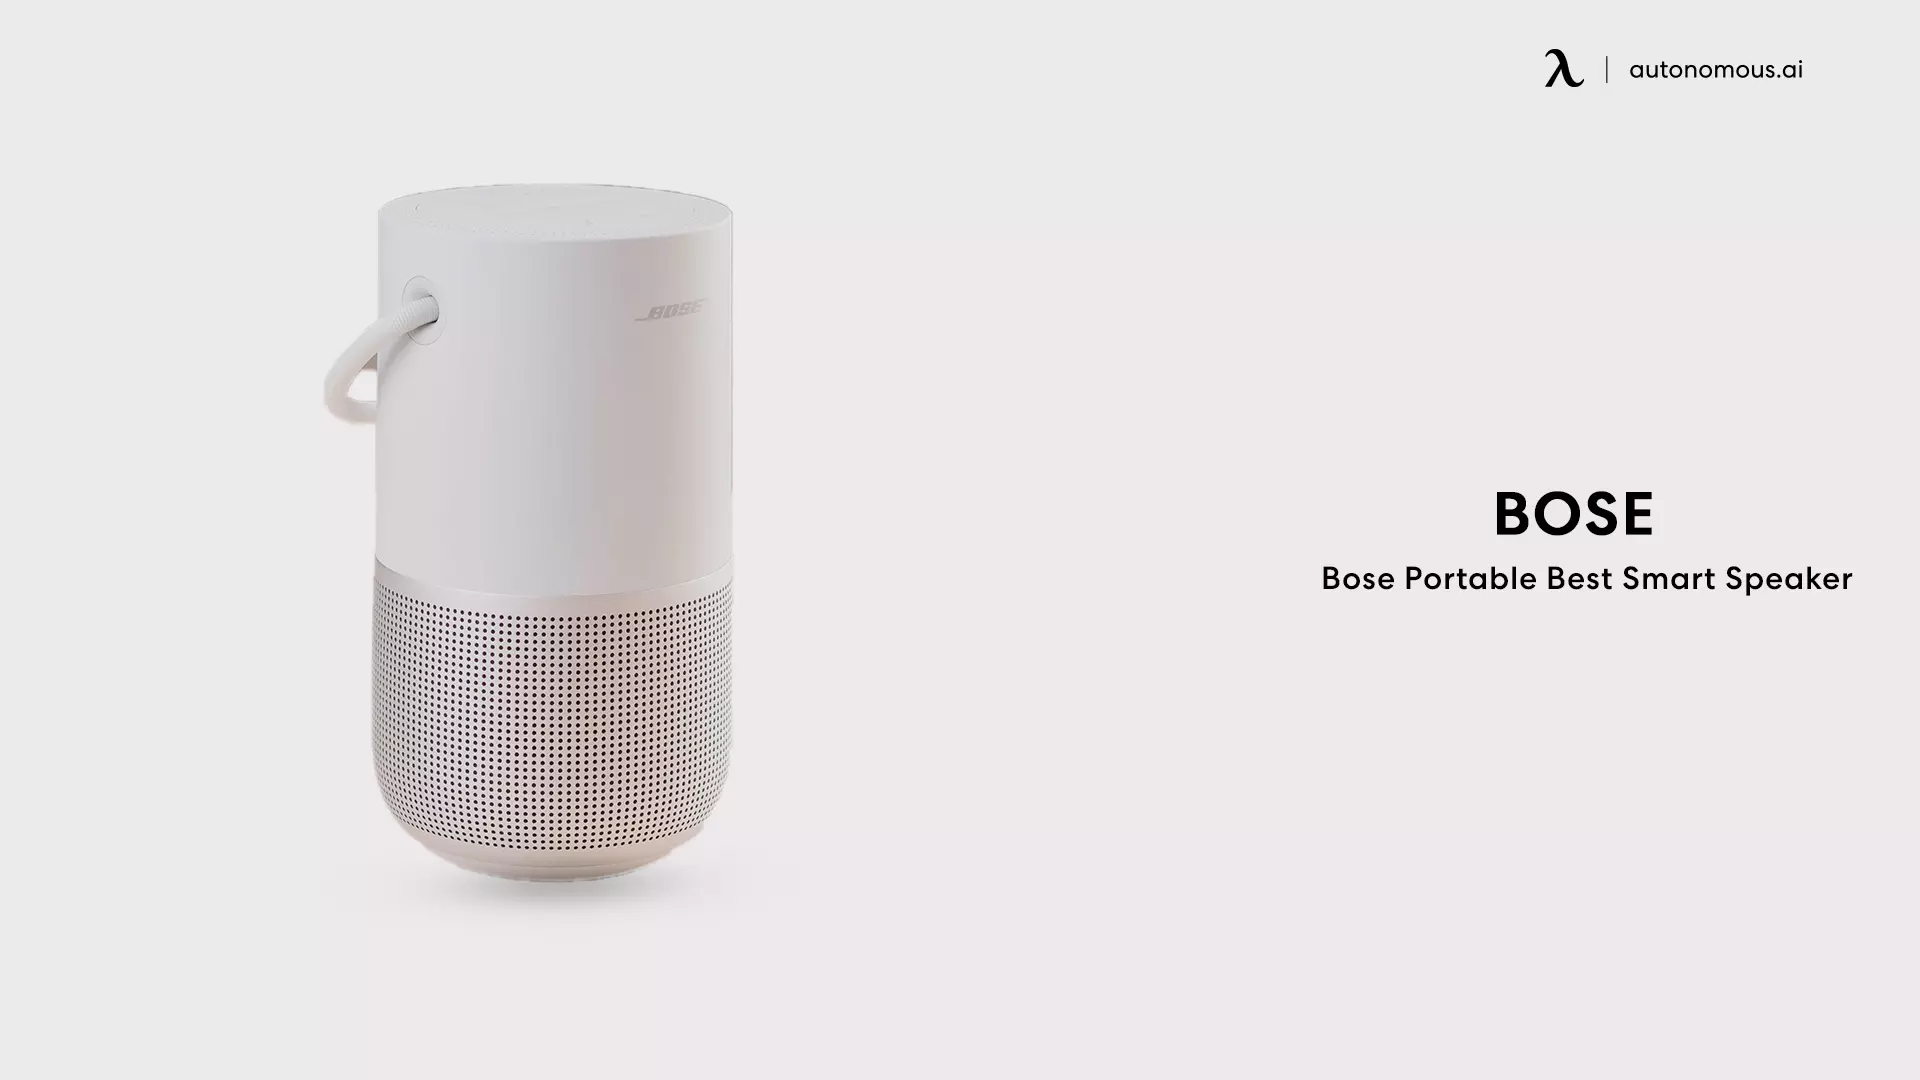 Bose Portable Best Smart Speaker